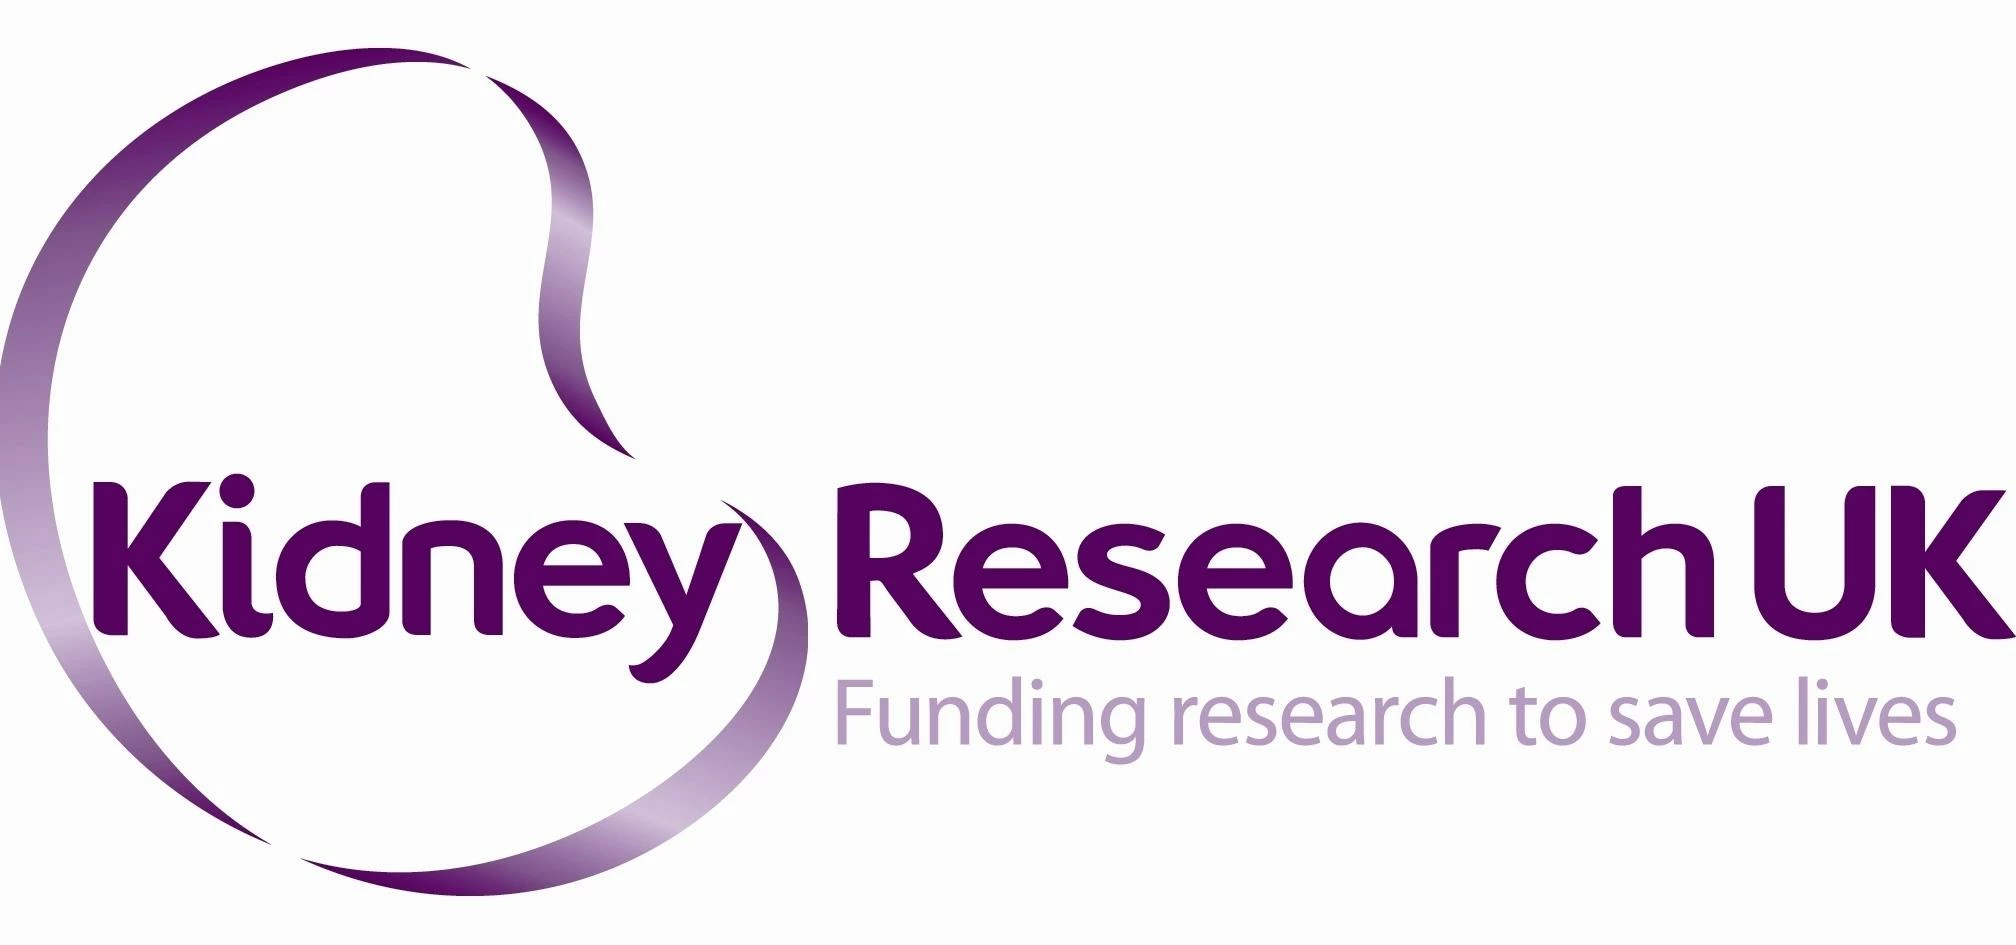 Kidney Research UK Logo